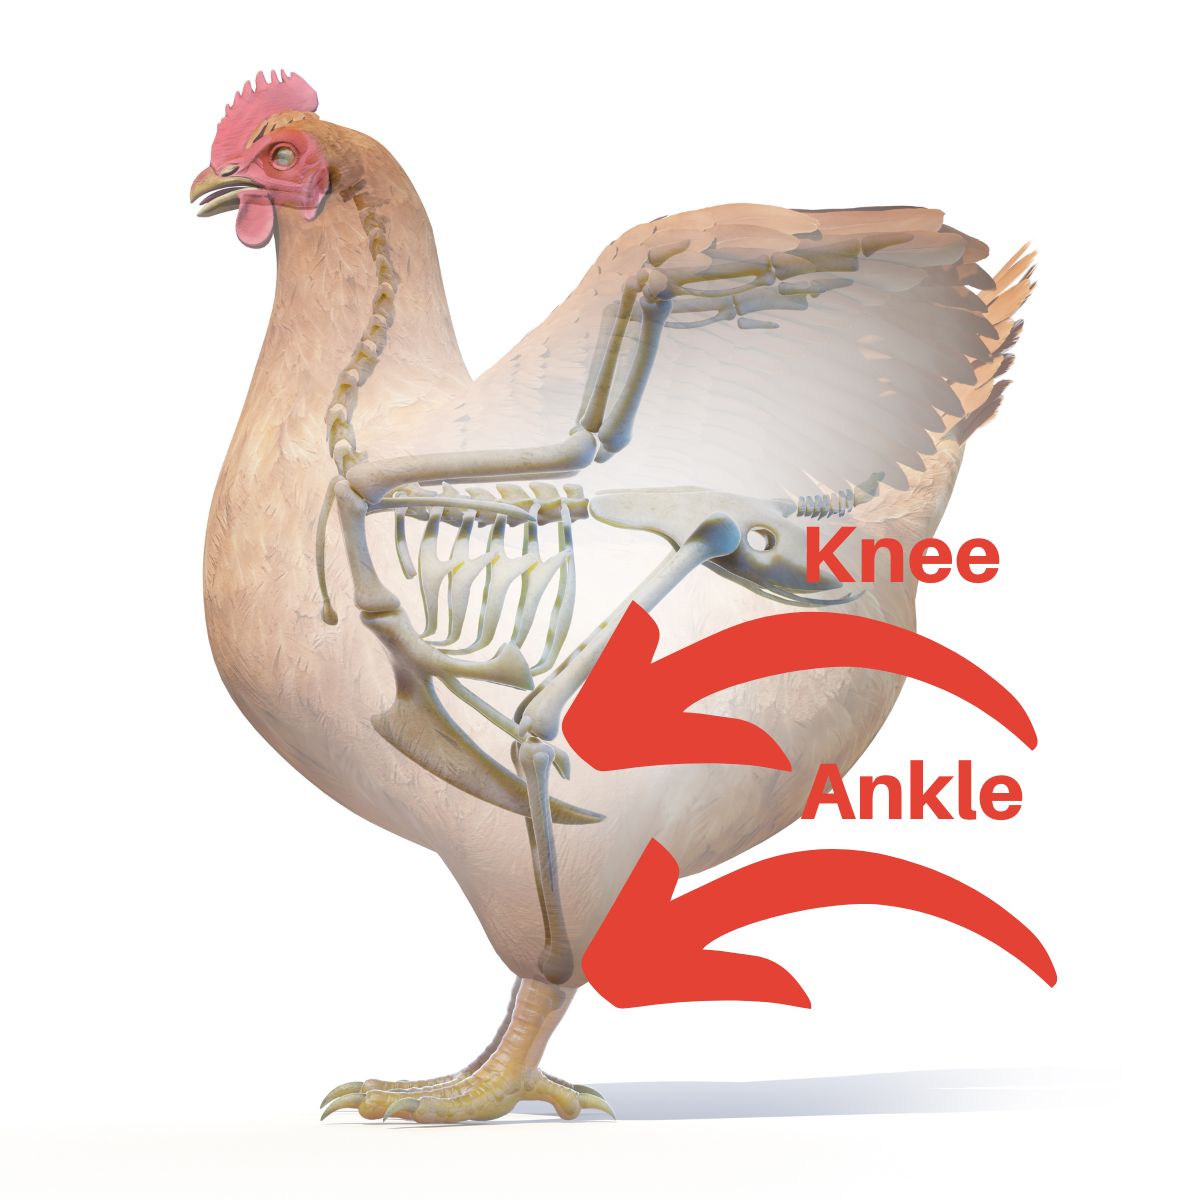 Skeletal anatomy of a chicken.